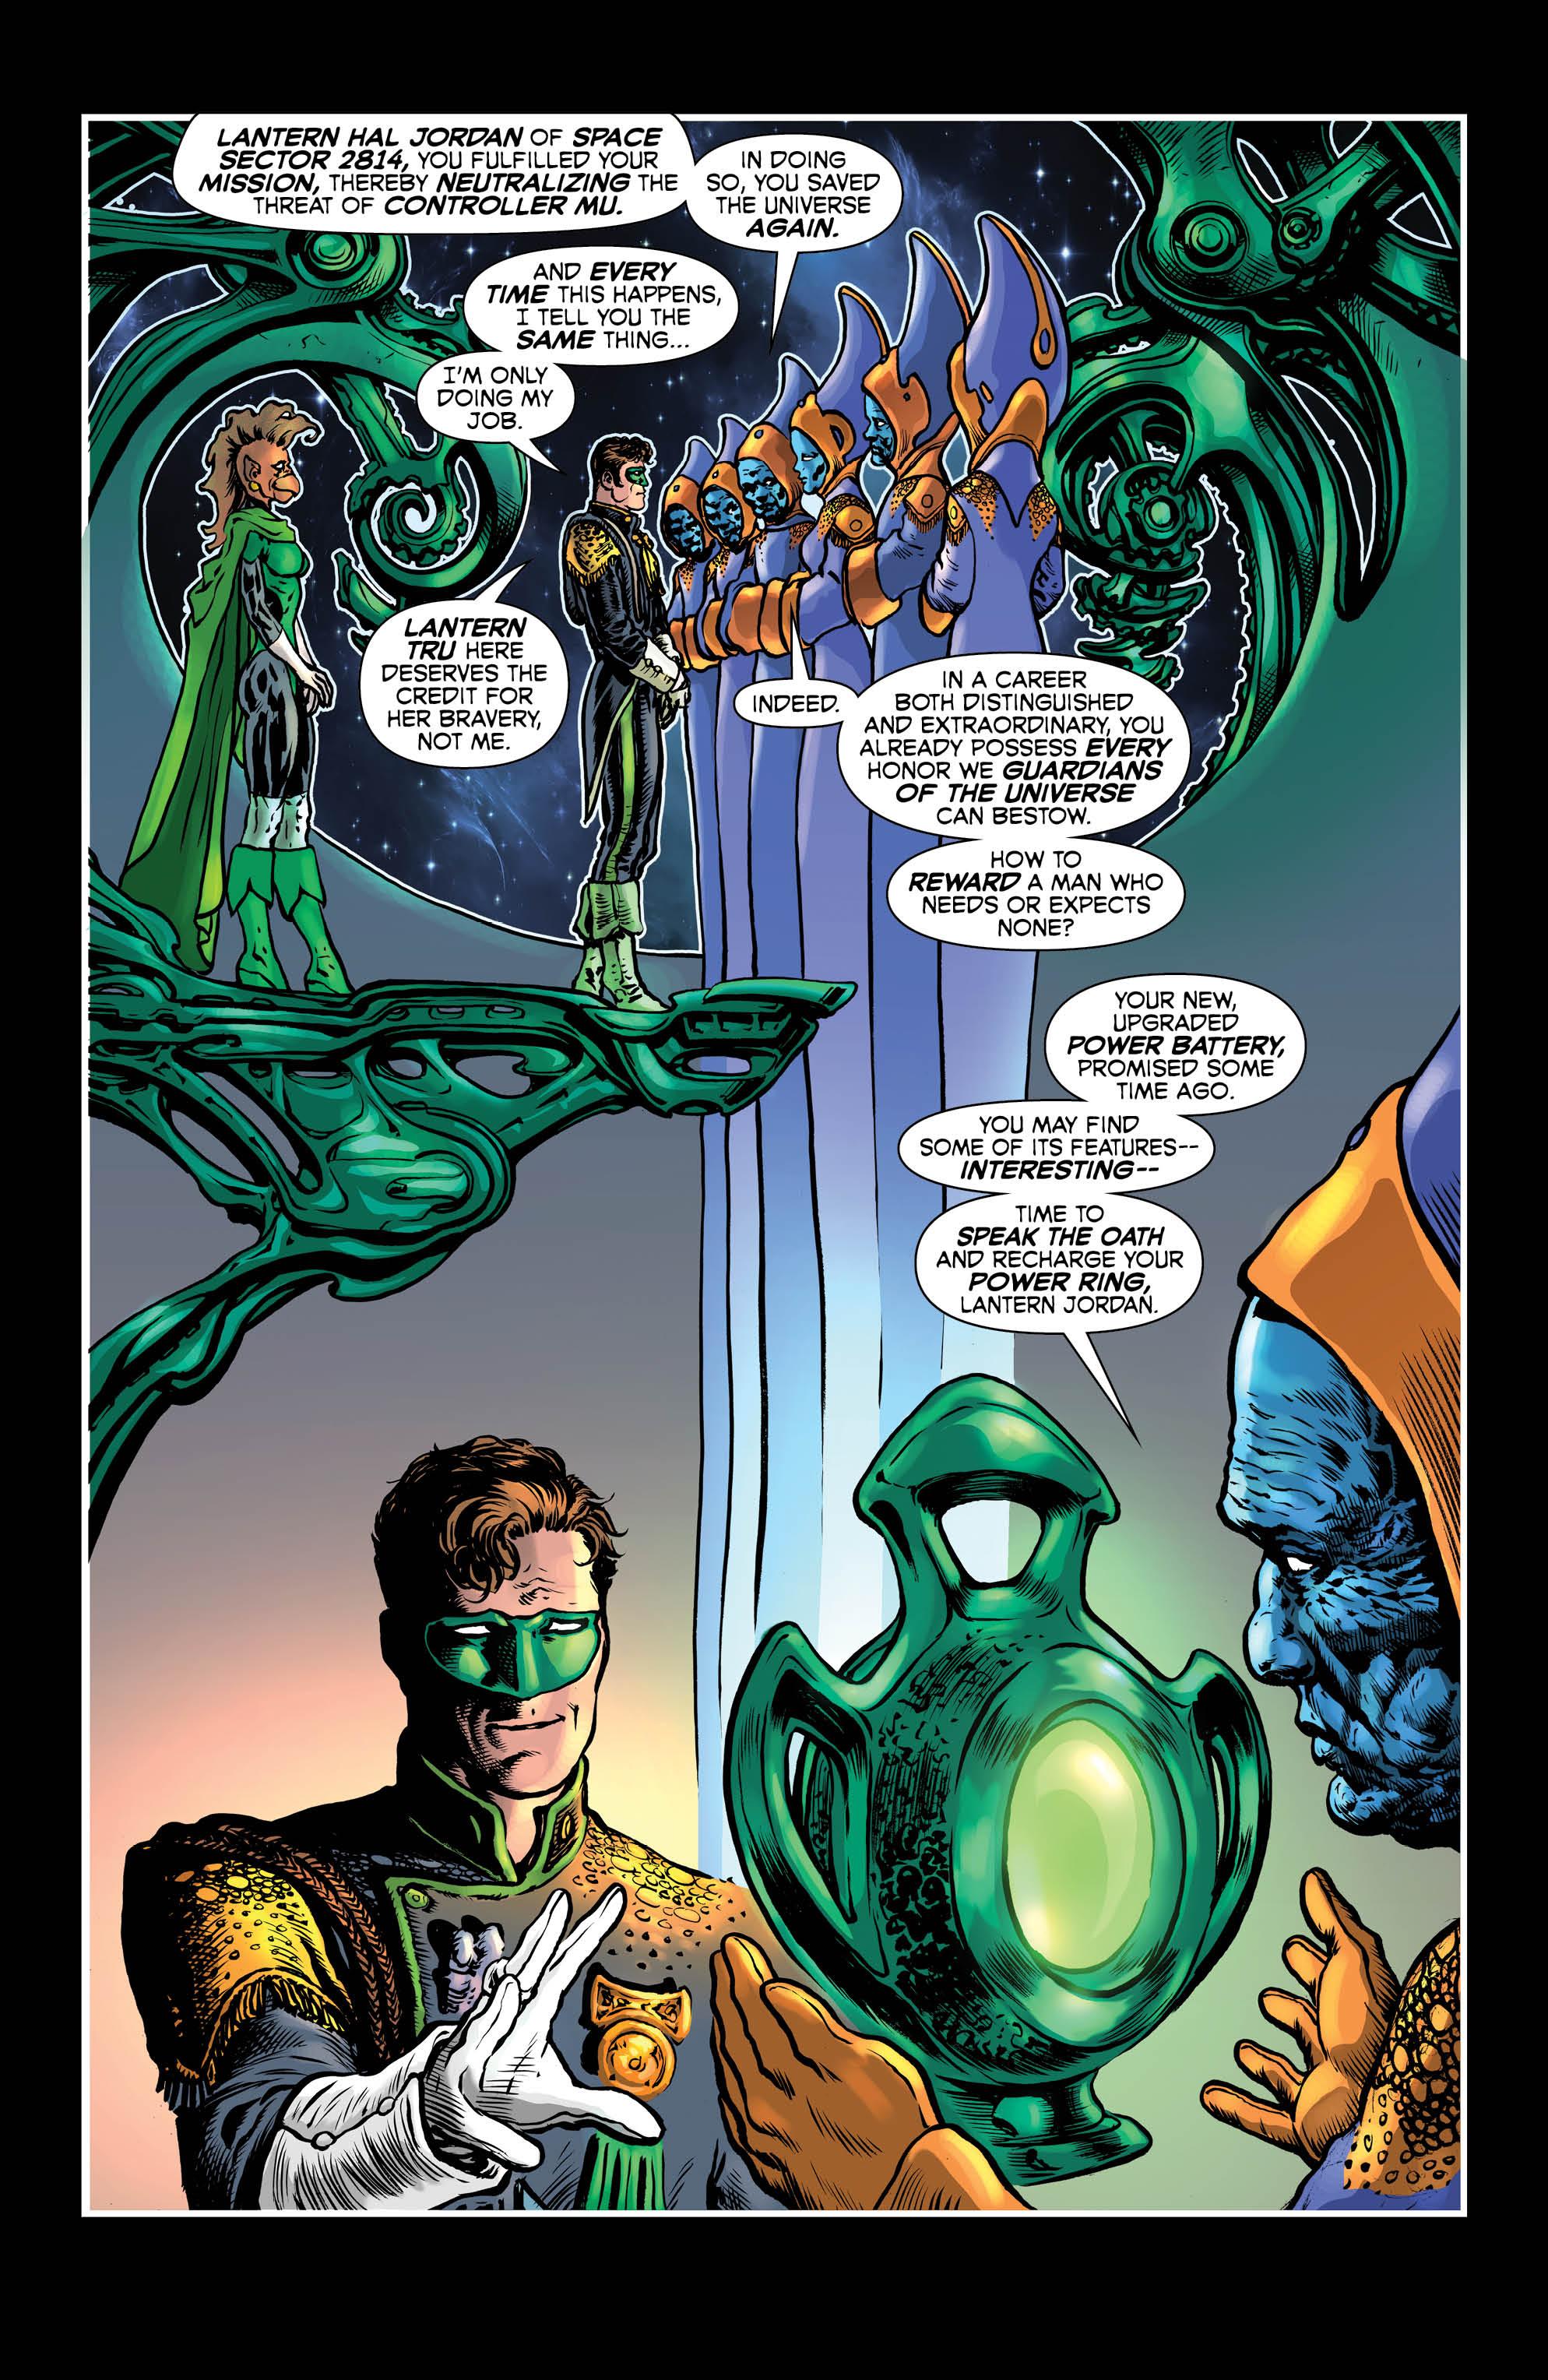 Green Lantern Season 2 #1 (Of12) (2020)